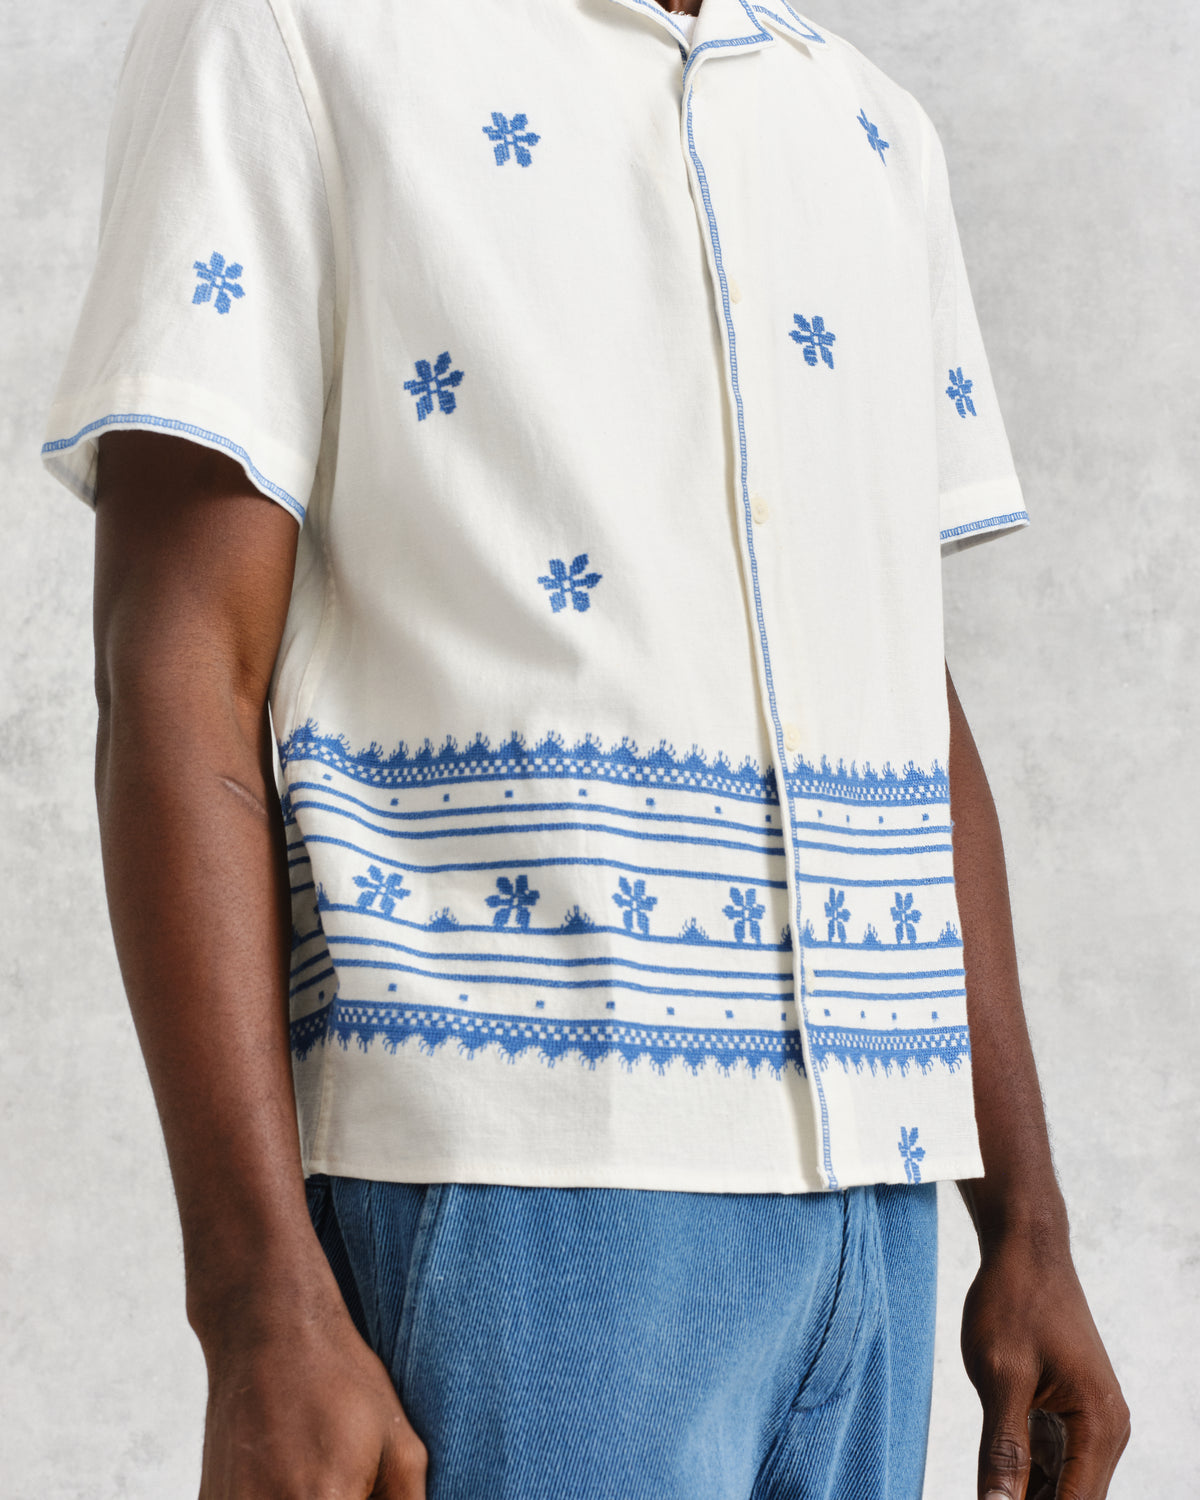 Didcot Embroidered Shirt Ecru/Blue Daisy